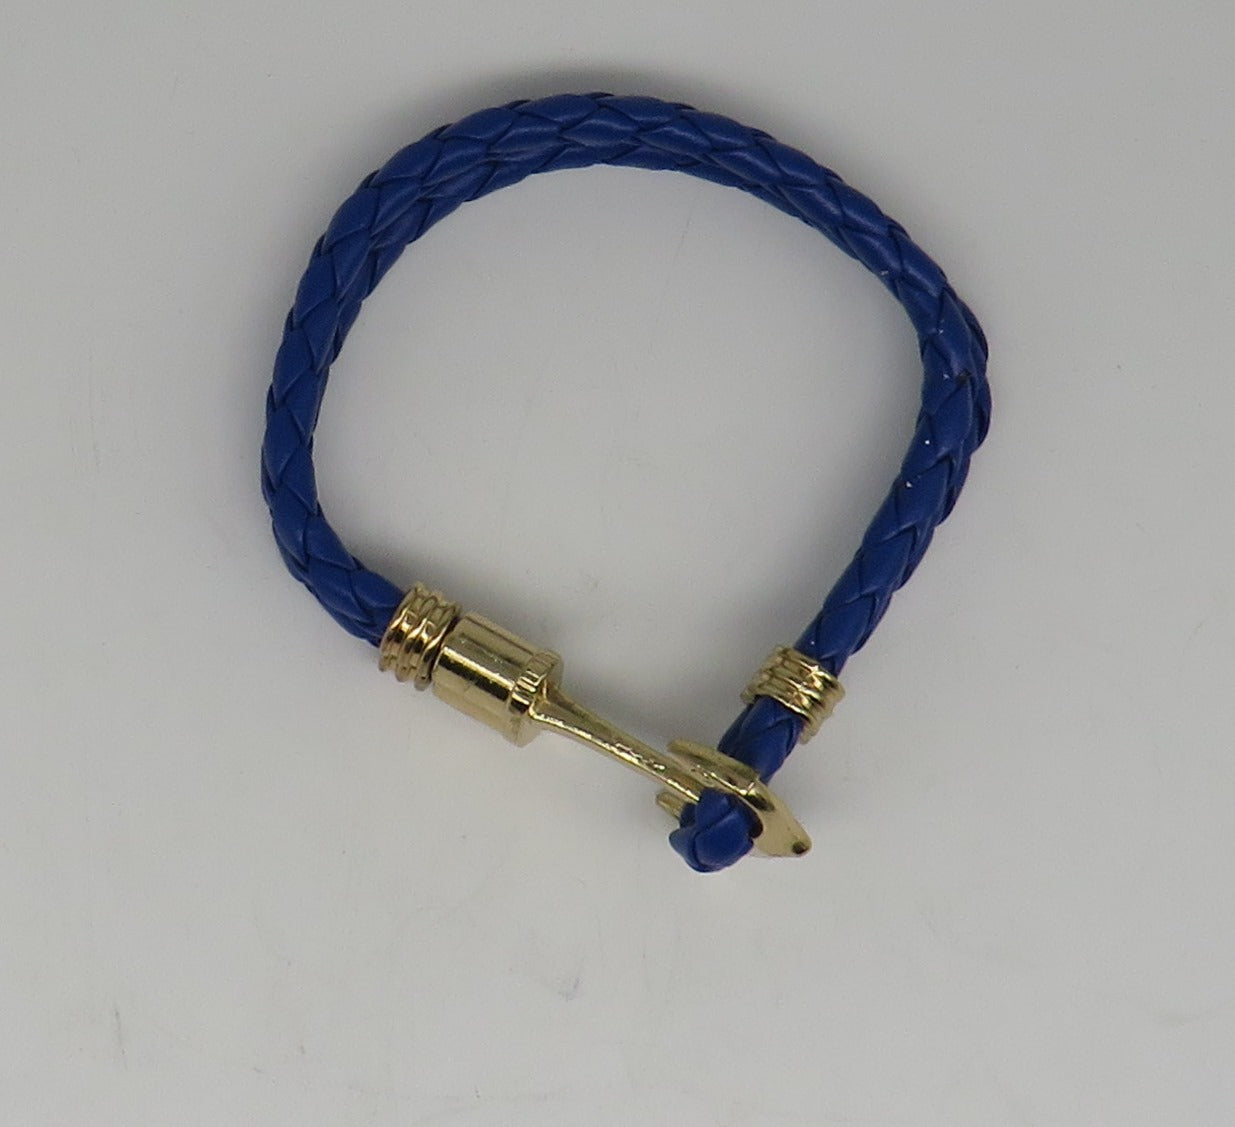 Unisex Leather Handmade Braided Cuff Anchor Bangle Bracelet Wristband Blue-Gold